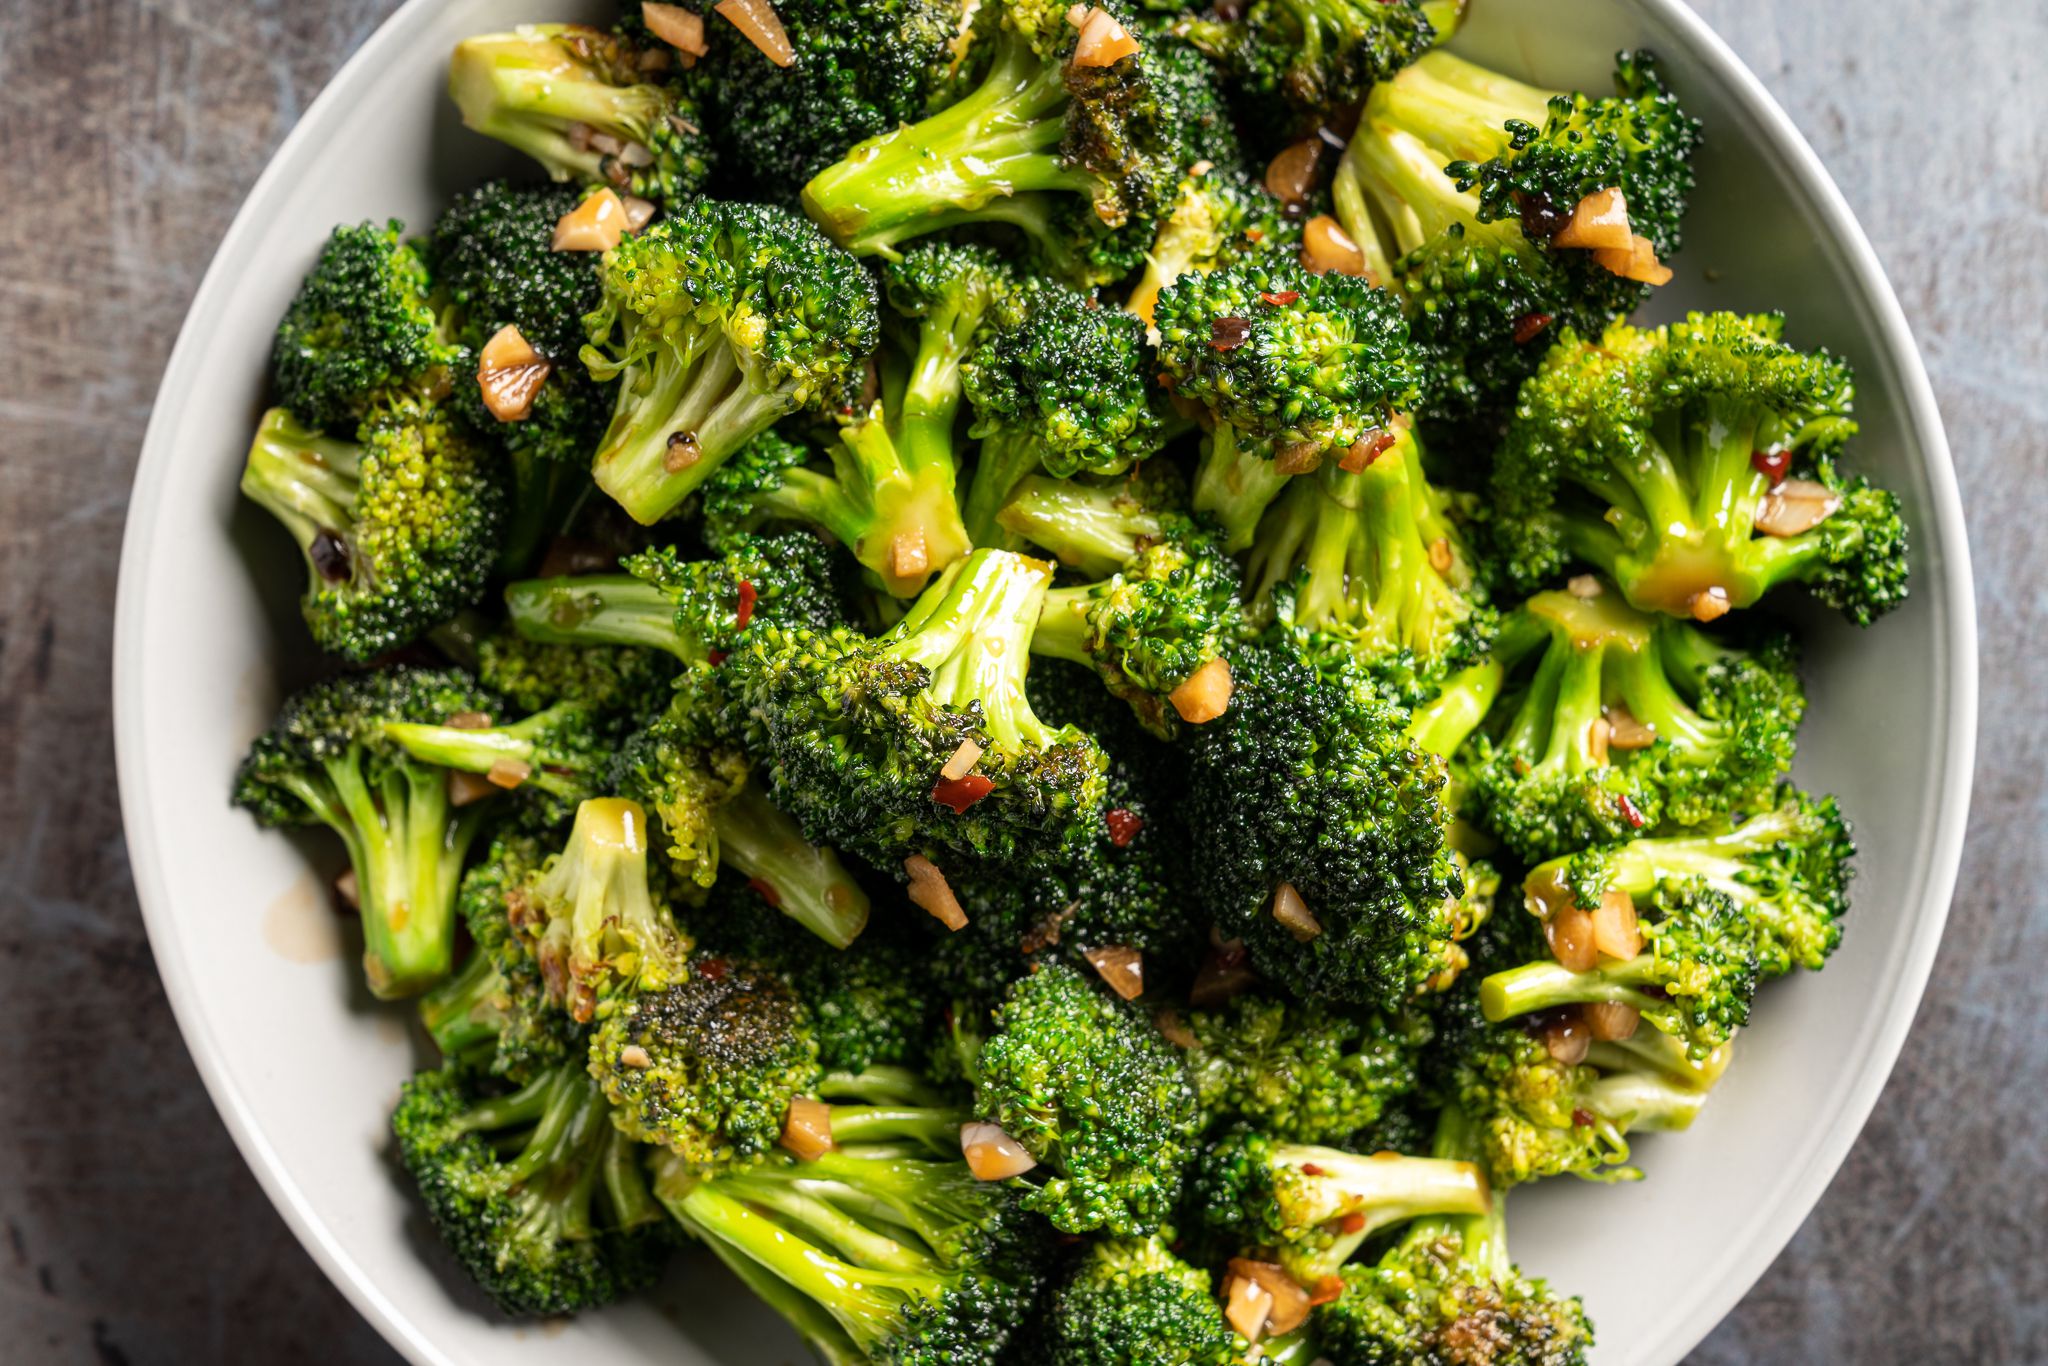 Broccoli in Sweet Garlic Sauce